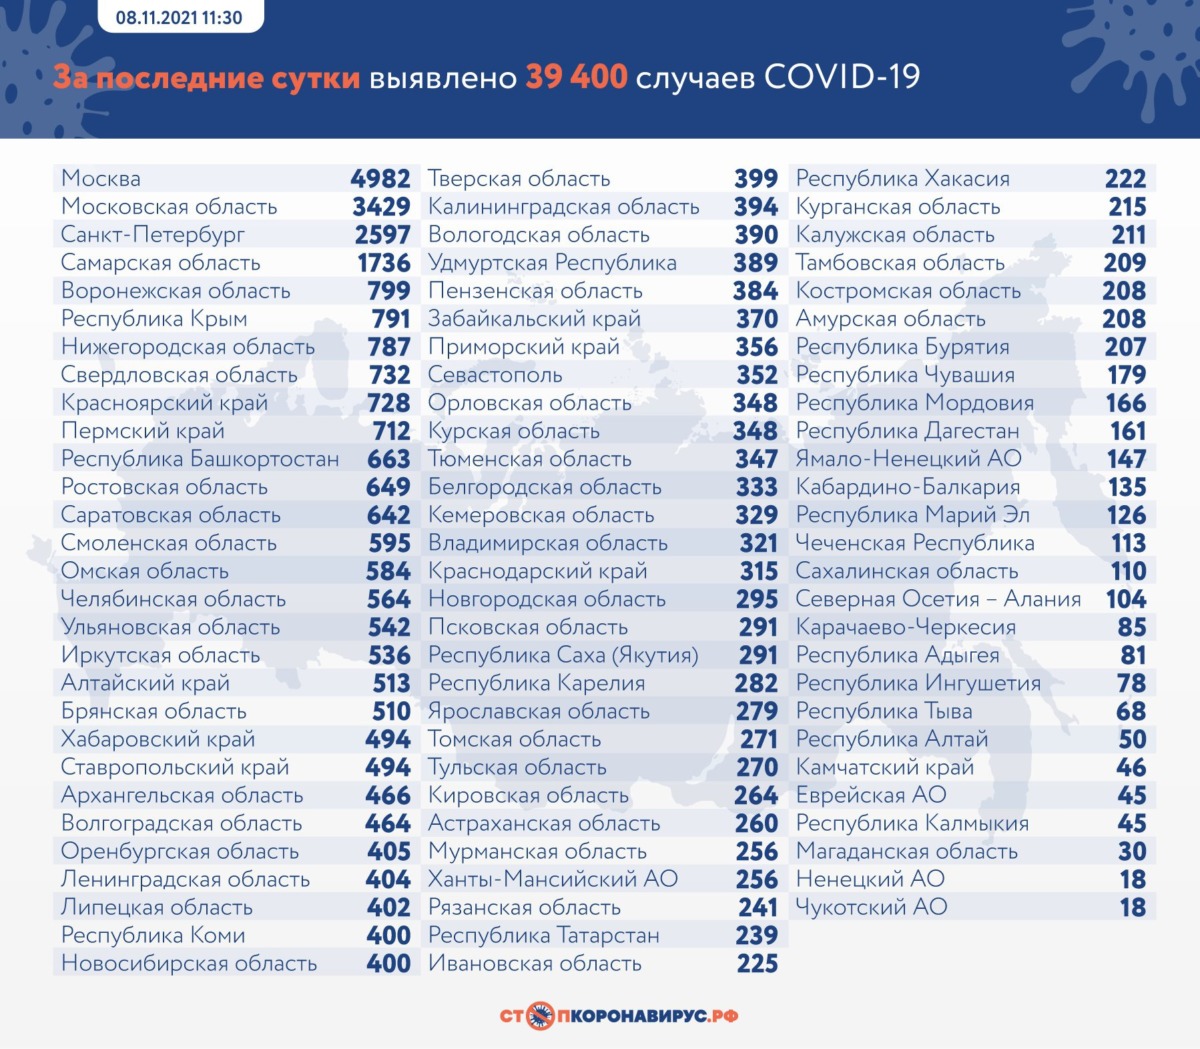 Статистика коронавируса в России на 8 ноября